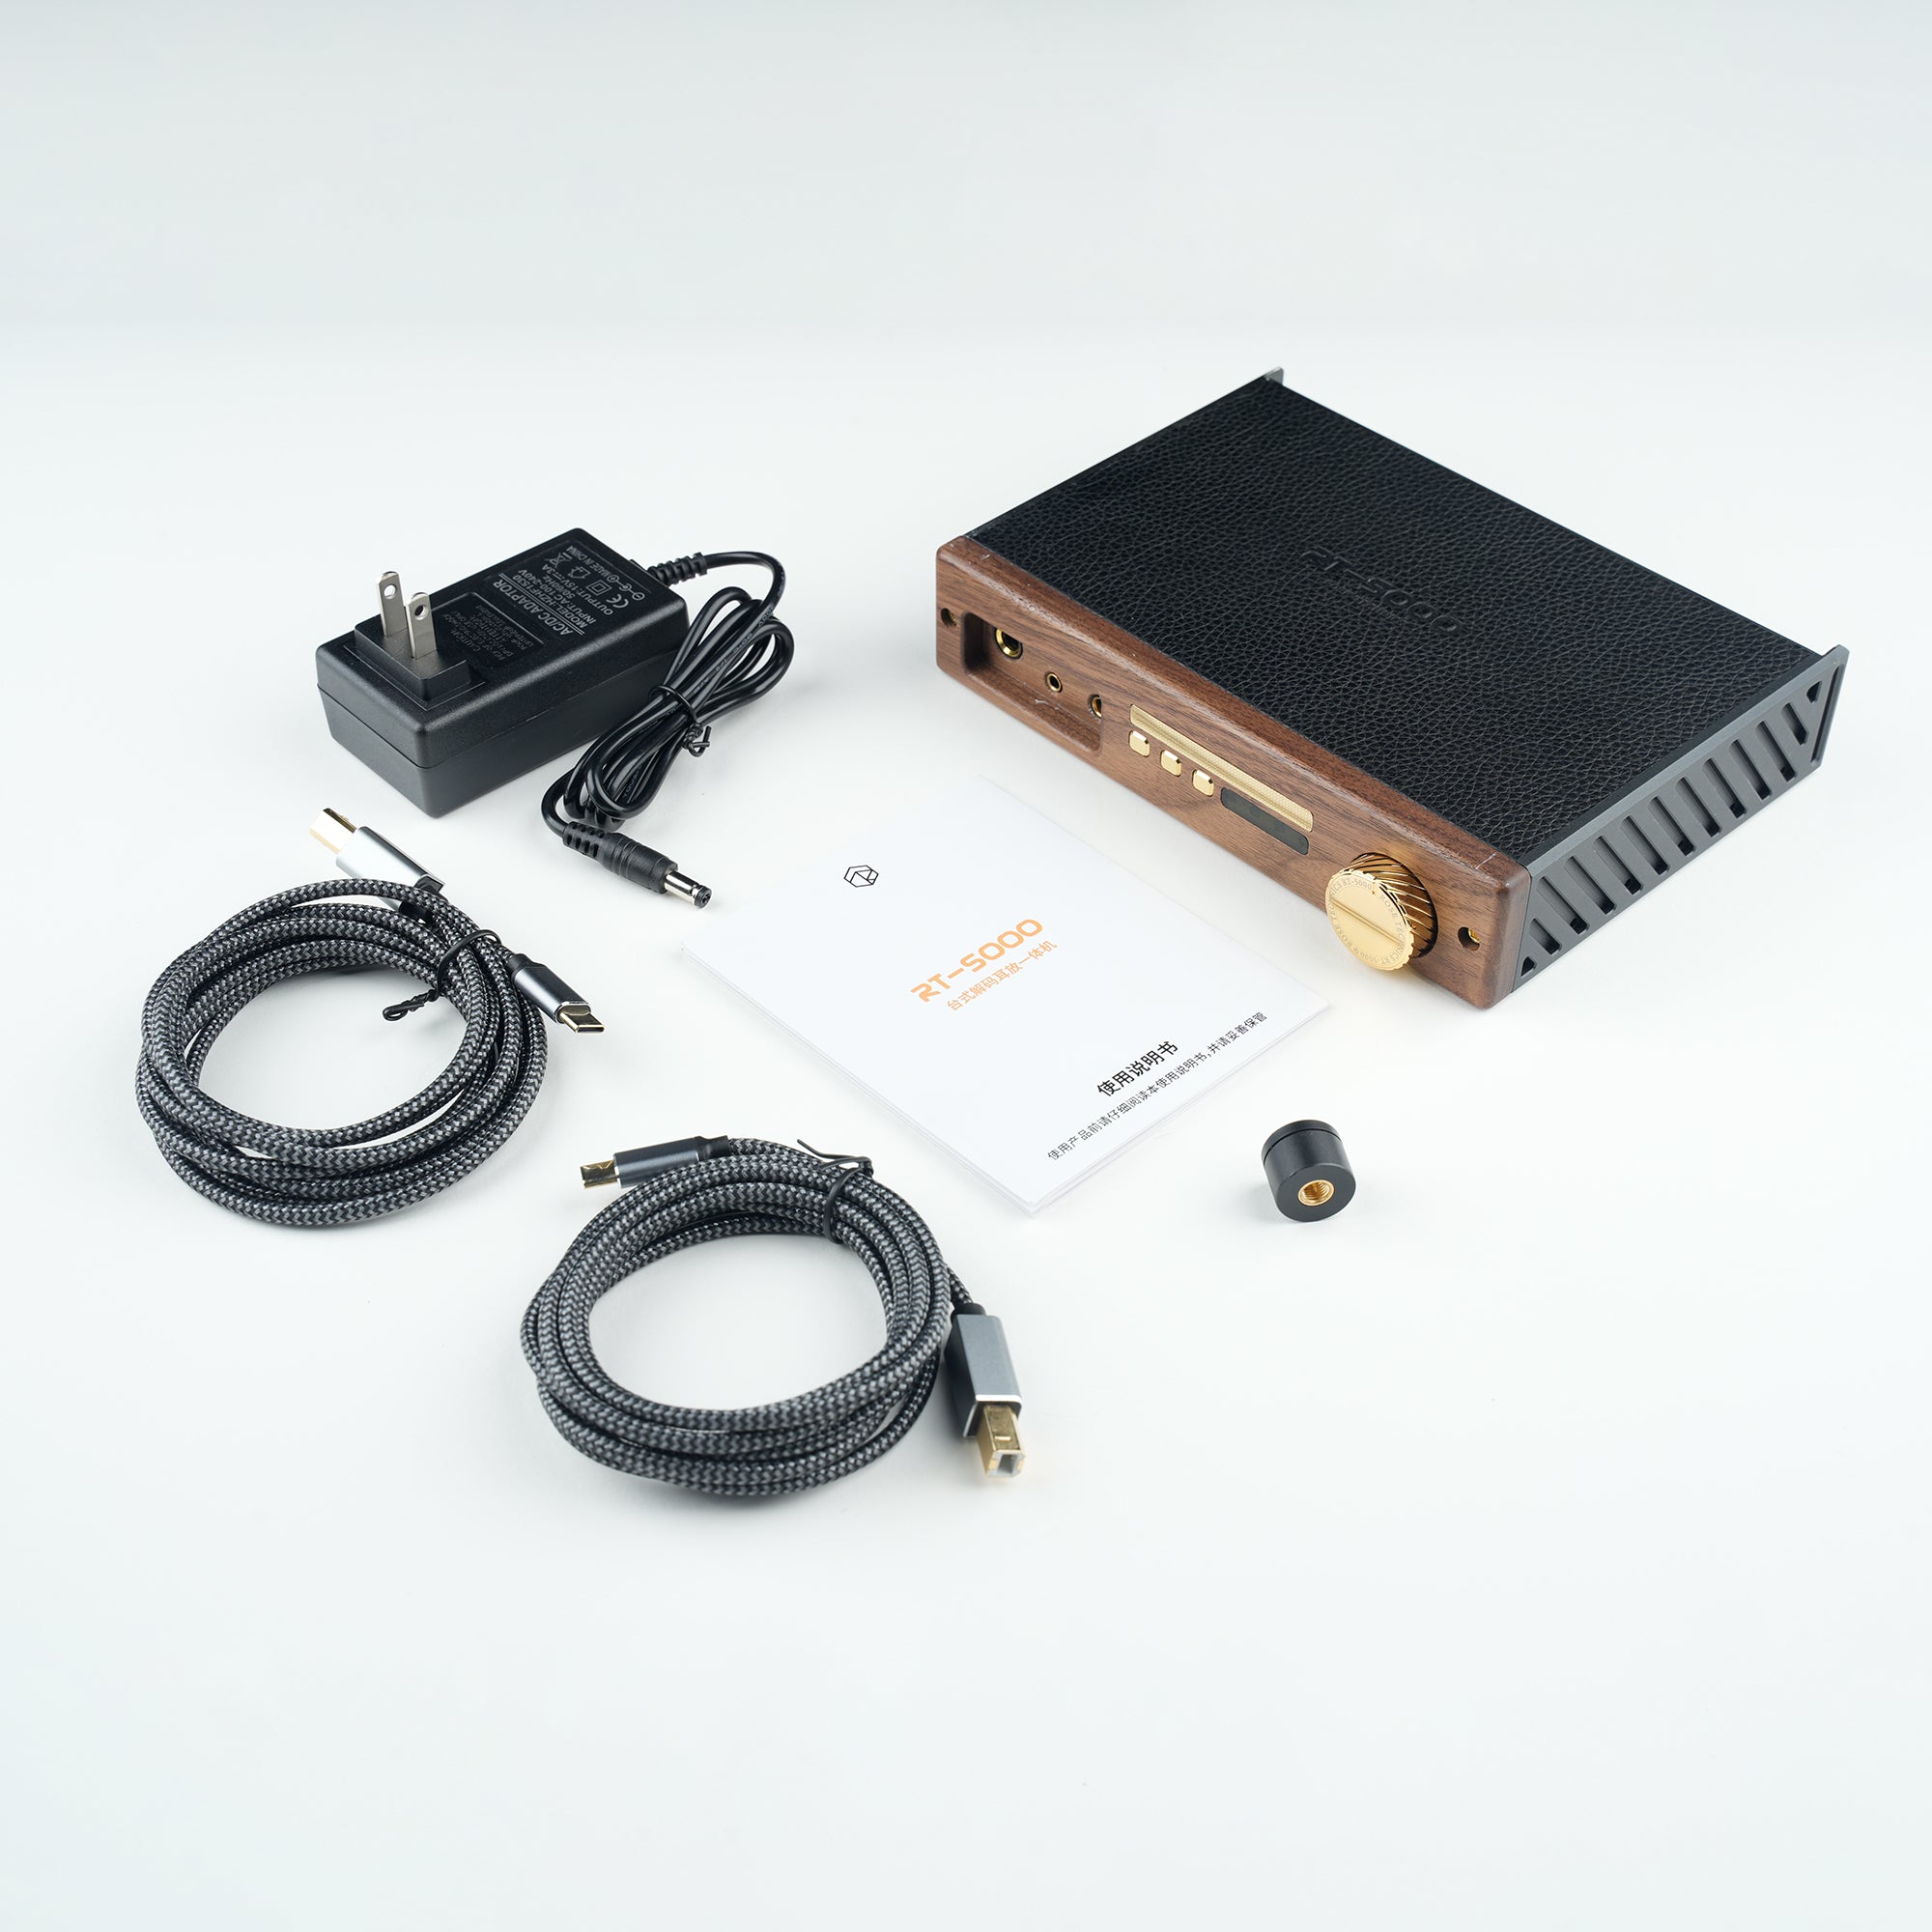 ROSE TECHNICS RT-5000 Integrated Headphone Amplifier and Decoder High Fidelity DAC